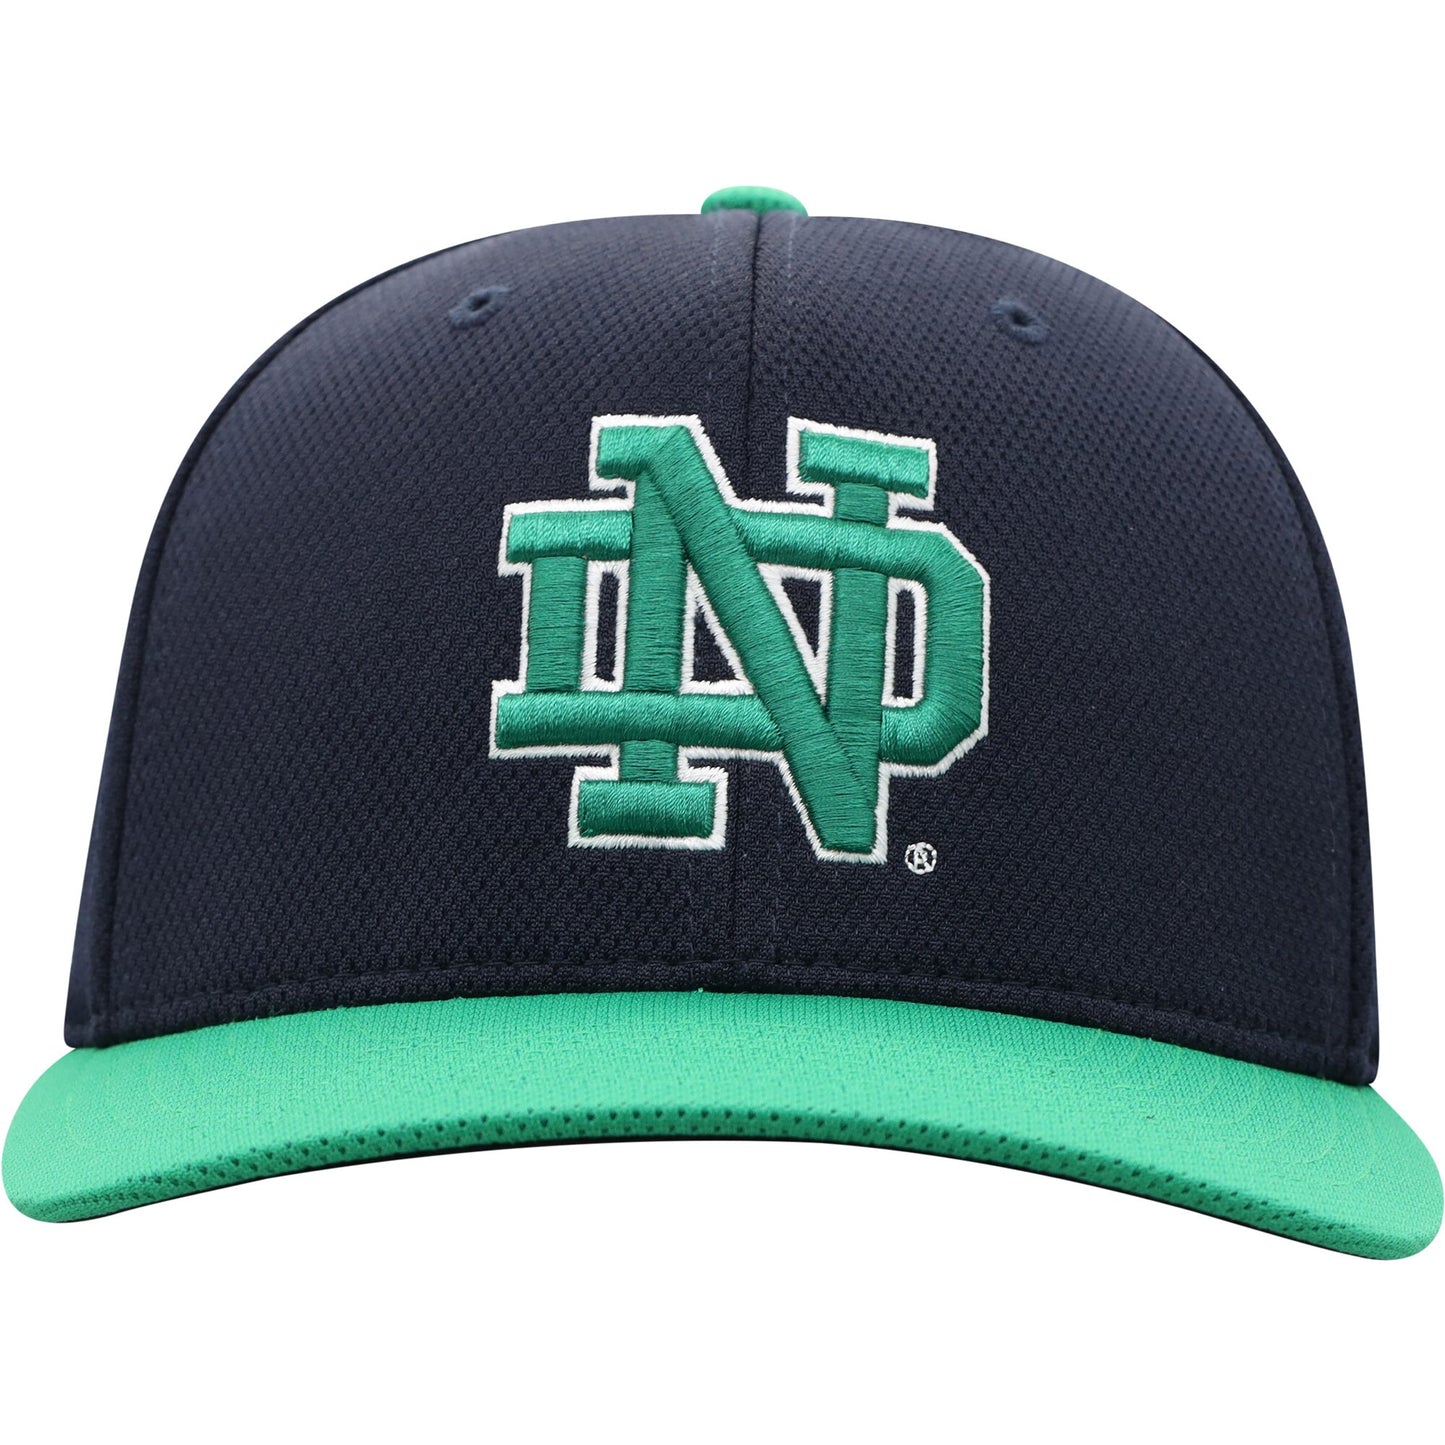 Notre Dame Fighting Irish Top of the World Two-Tone Reflex Hybrid Tech Flex Hat - Navy/Green